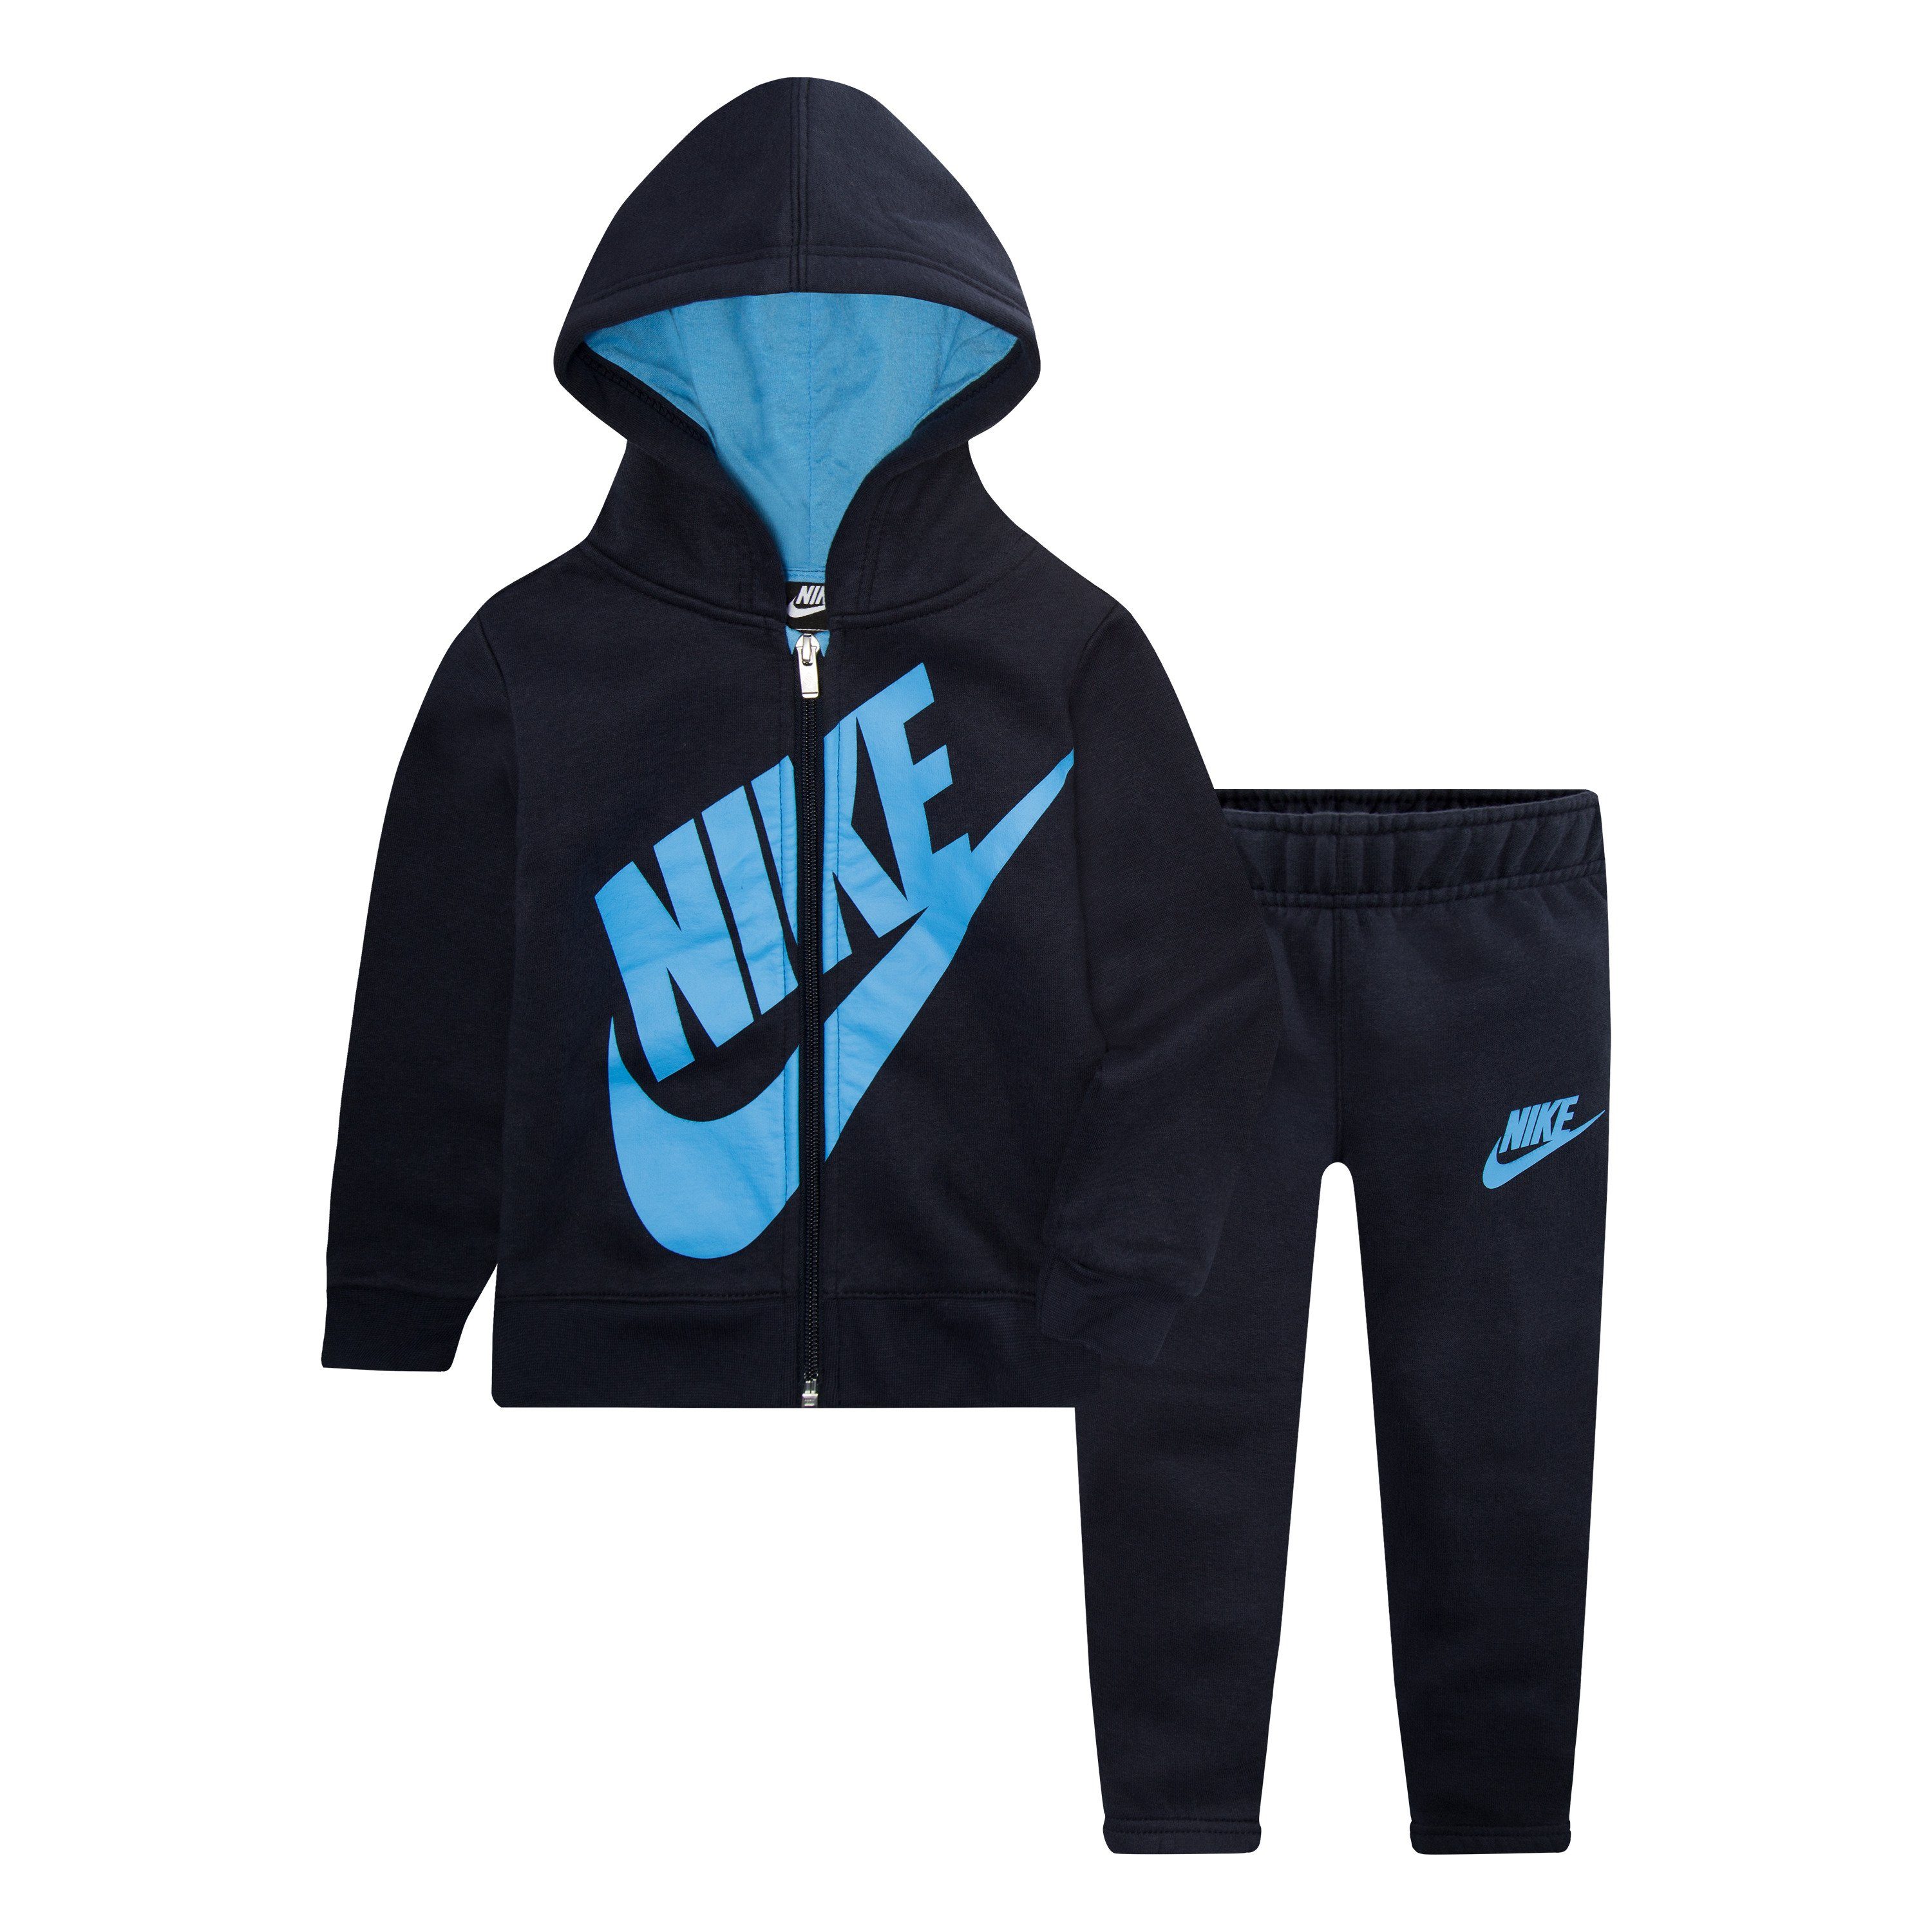 SE JOGG Nike FLEECE NKB SUEDED marine-blau FUTURA Jogginganzug Sportswear